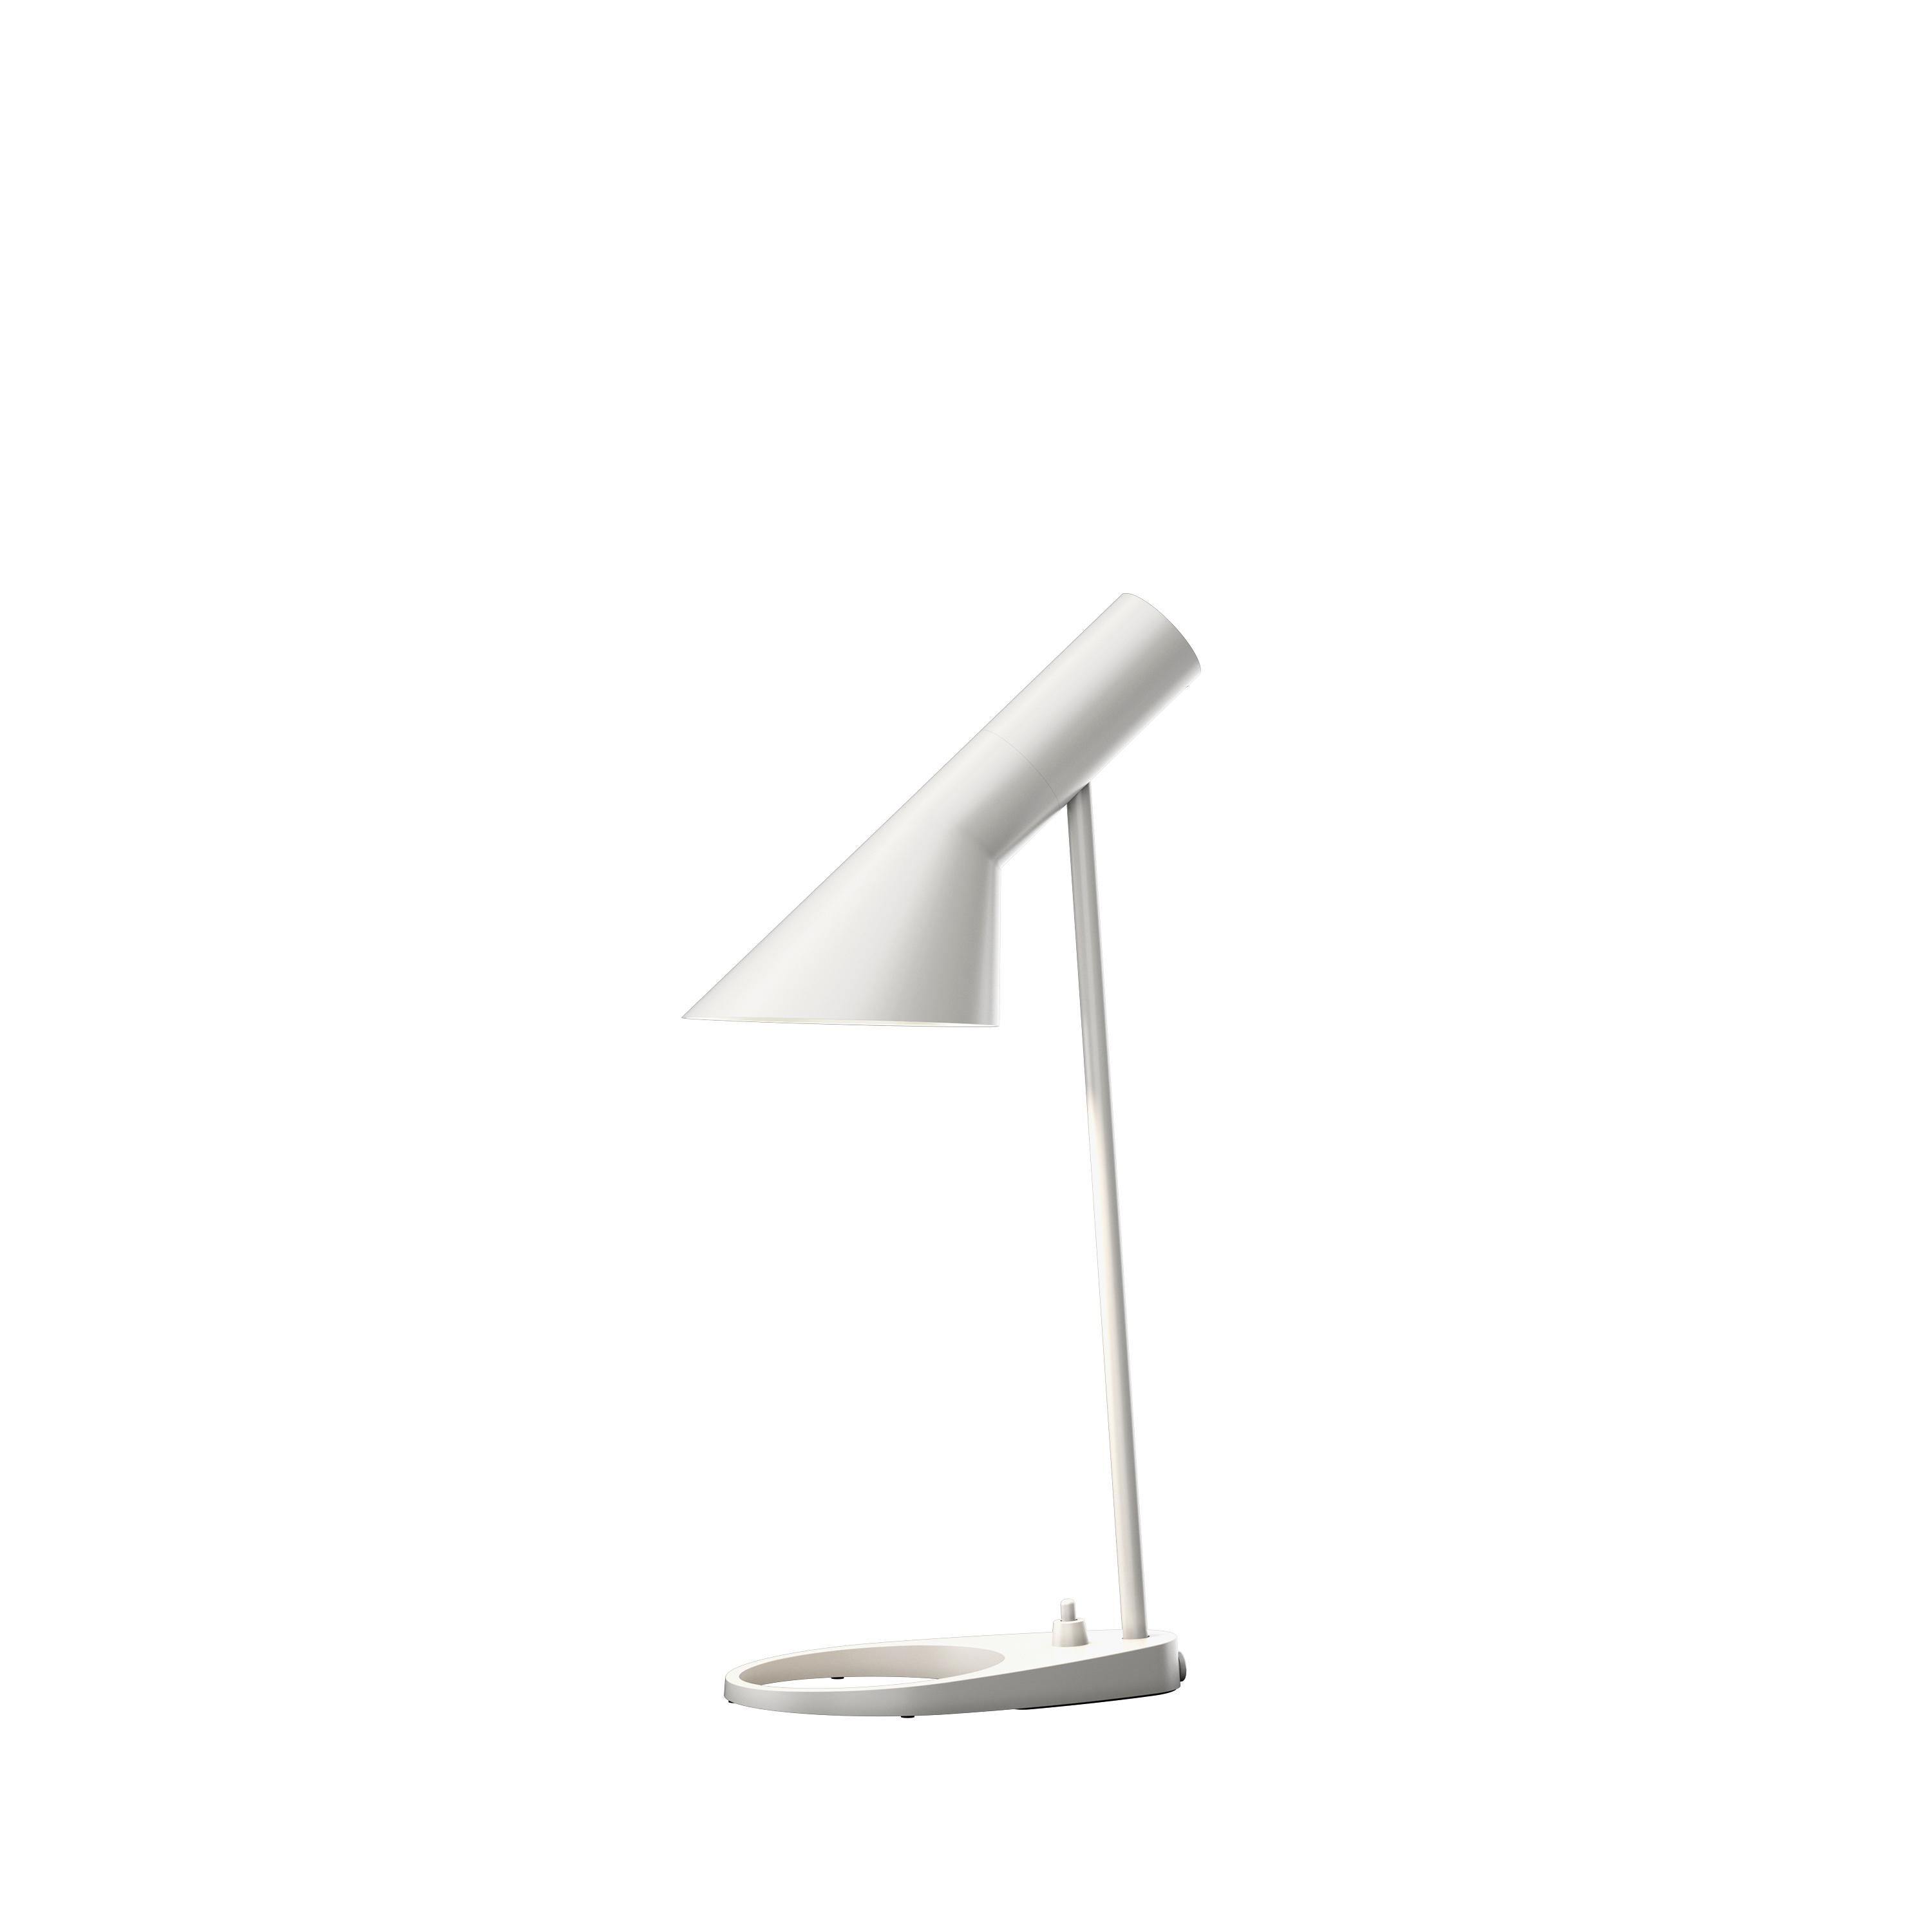 Arne Jacobsen 'AJ Mini' Table Lamp in Stainless Steel for Louis Poulsen For Sale 1